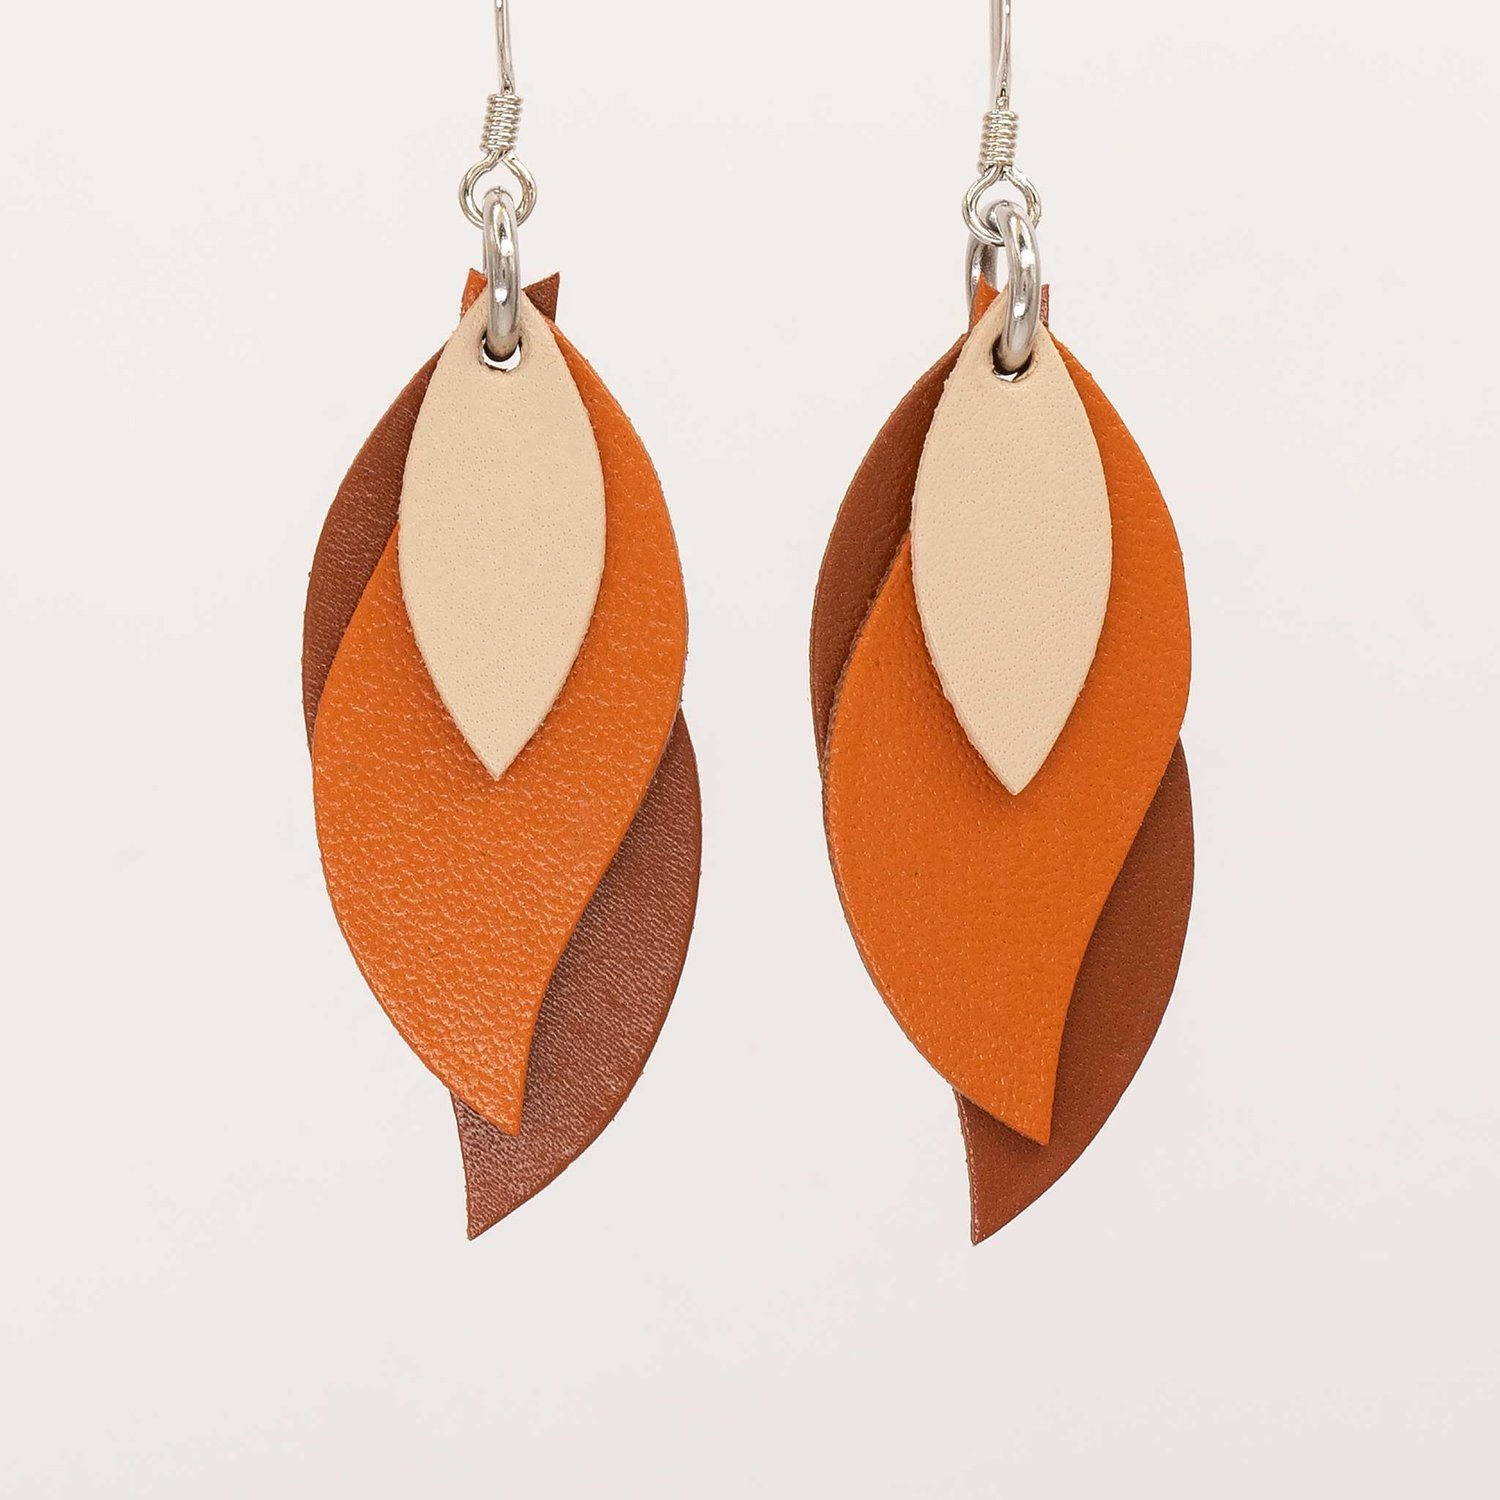 Image of Handmade Australian leather leaf earrings - Beige, warm orange, saddletan brown [LOB-322]